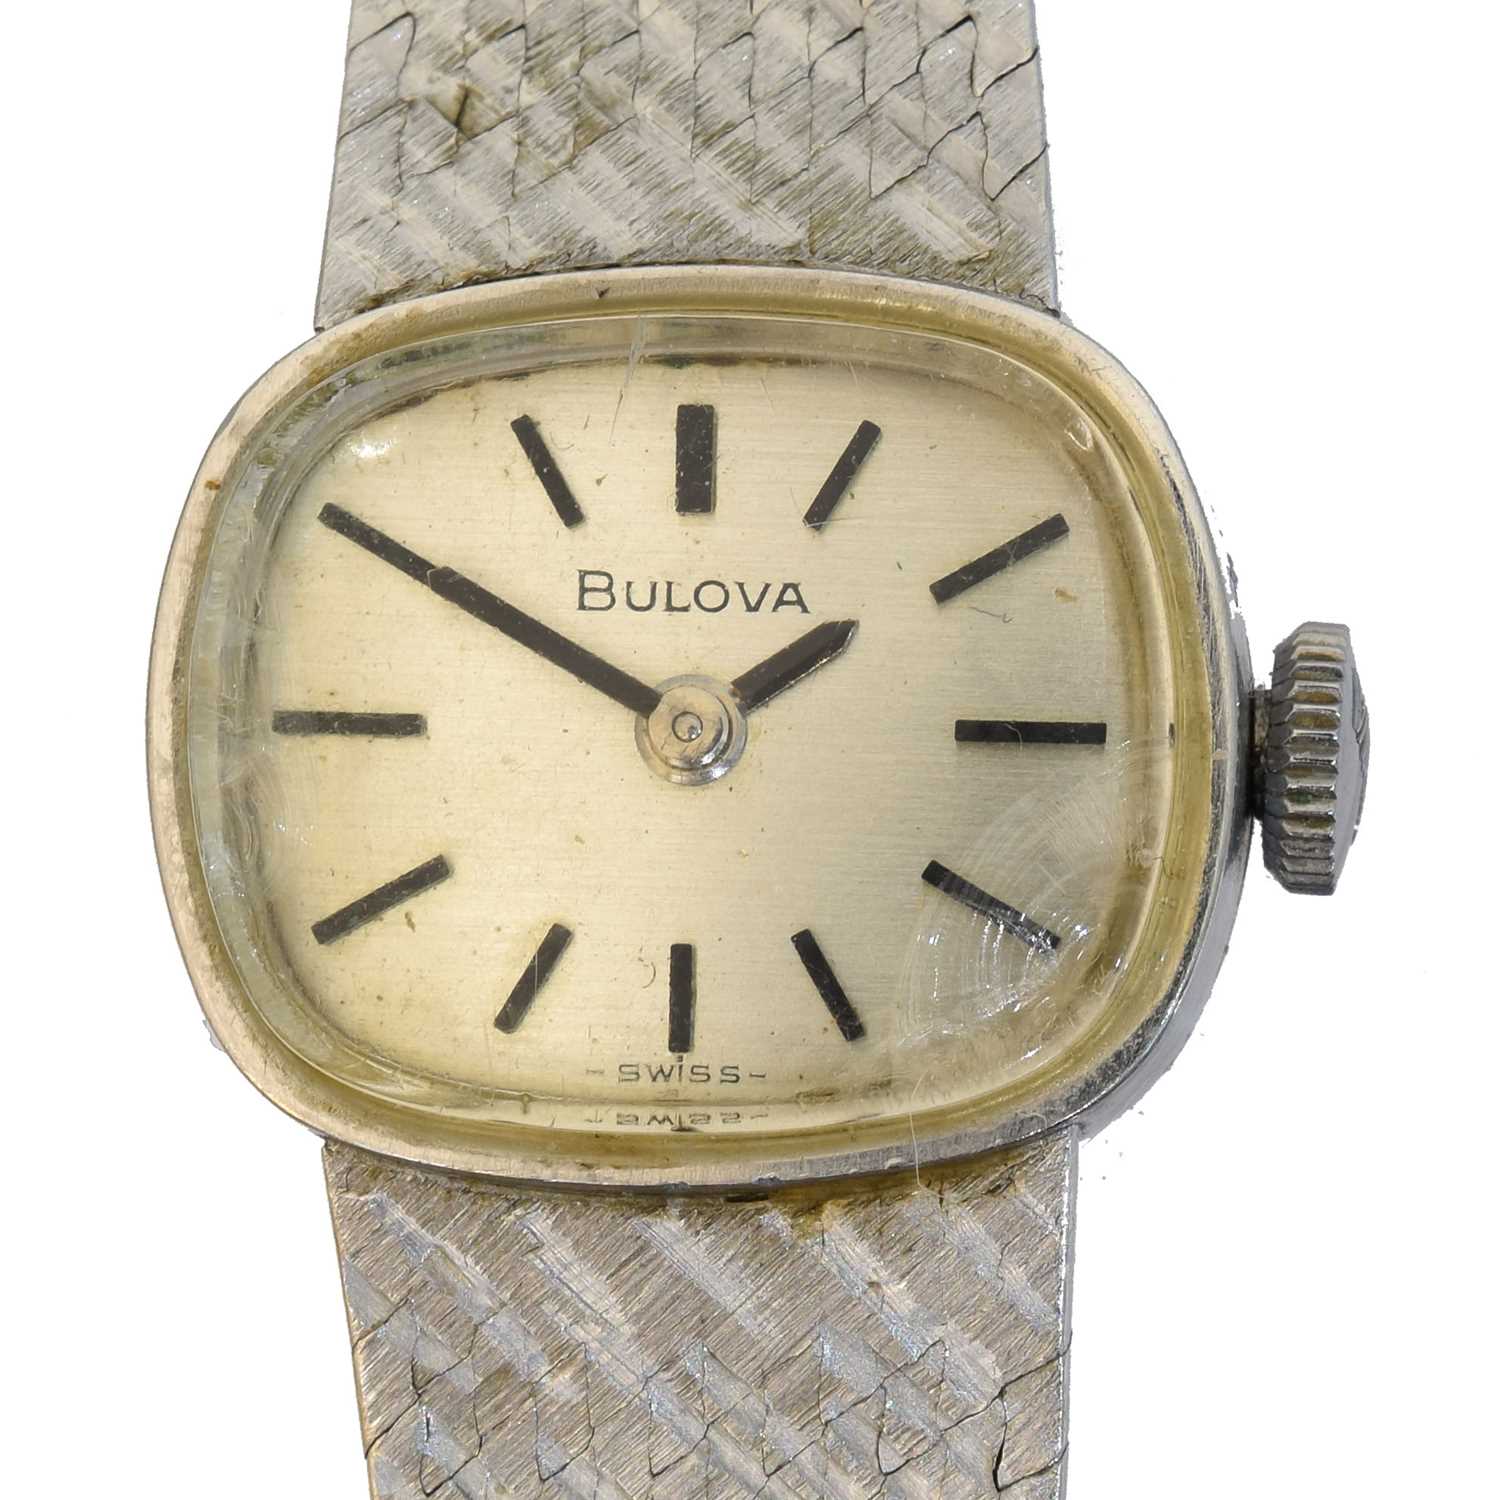 Lot A 9ct gold Bulova manual wind wristwatch